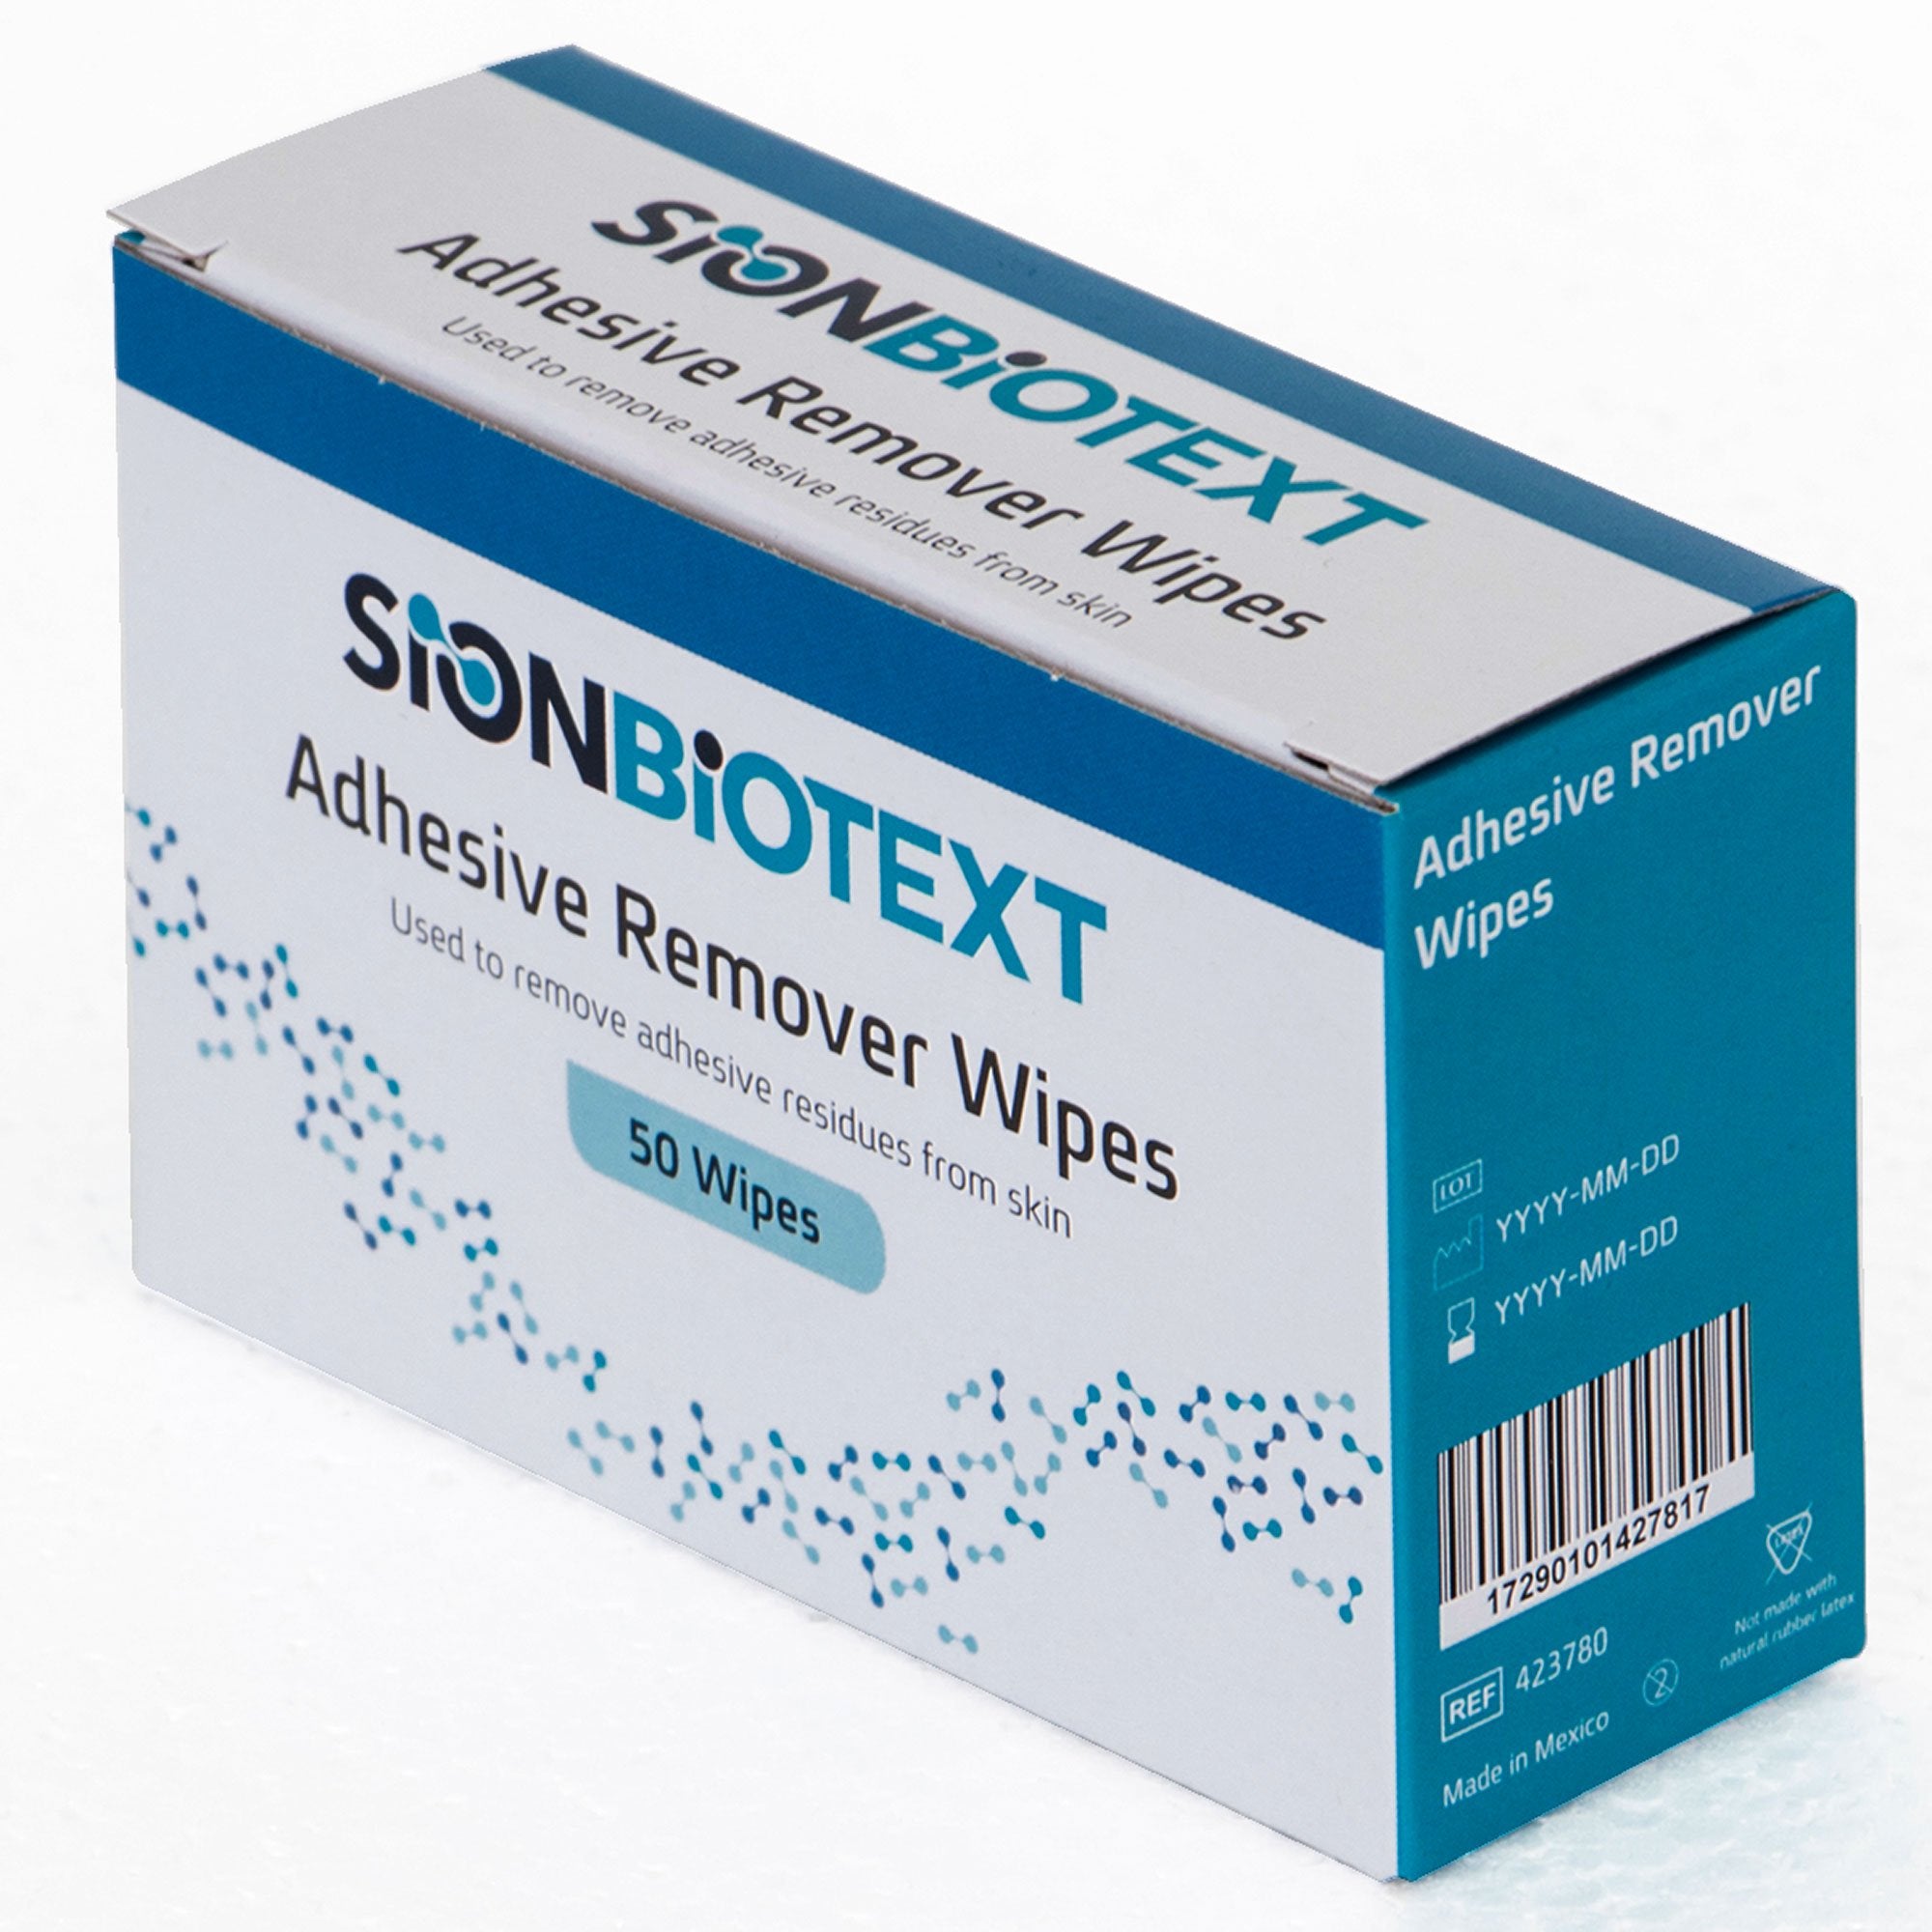 Adhesive Remover SionBiotext Wipe 50 per Box